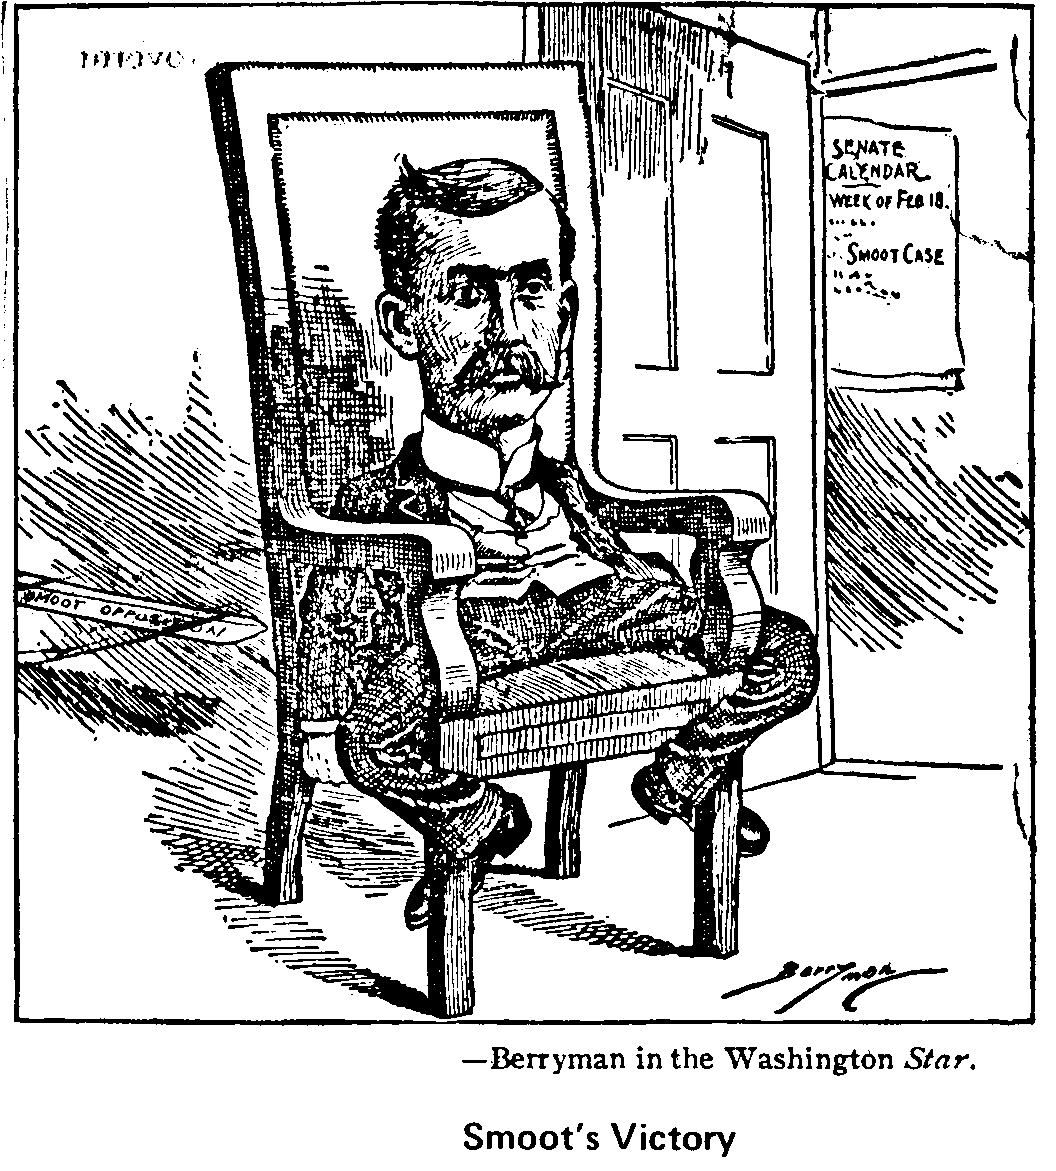 Smoot's Victory cartoon 1903-1907